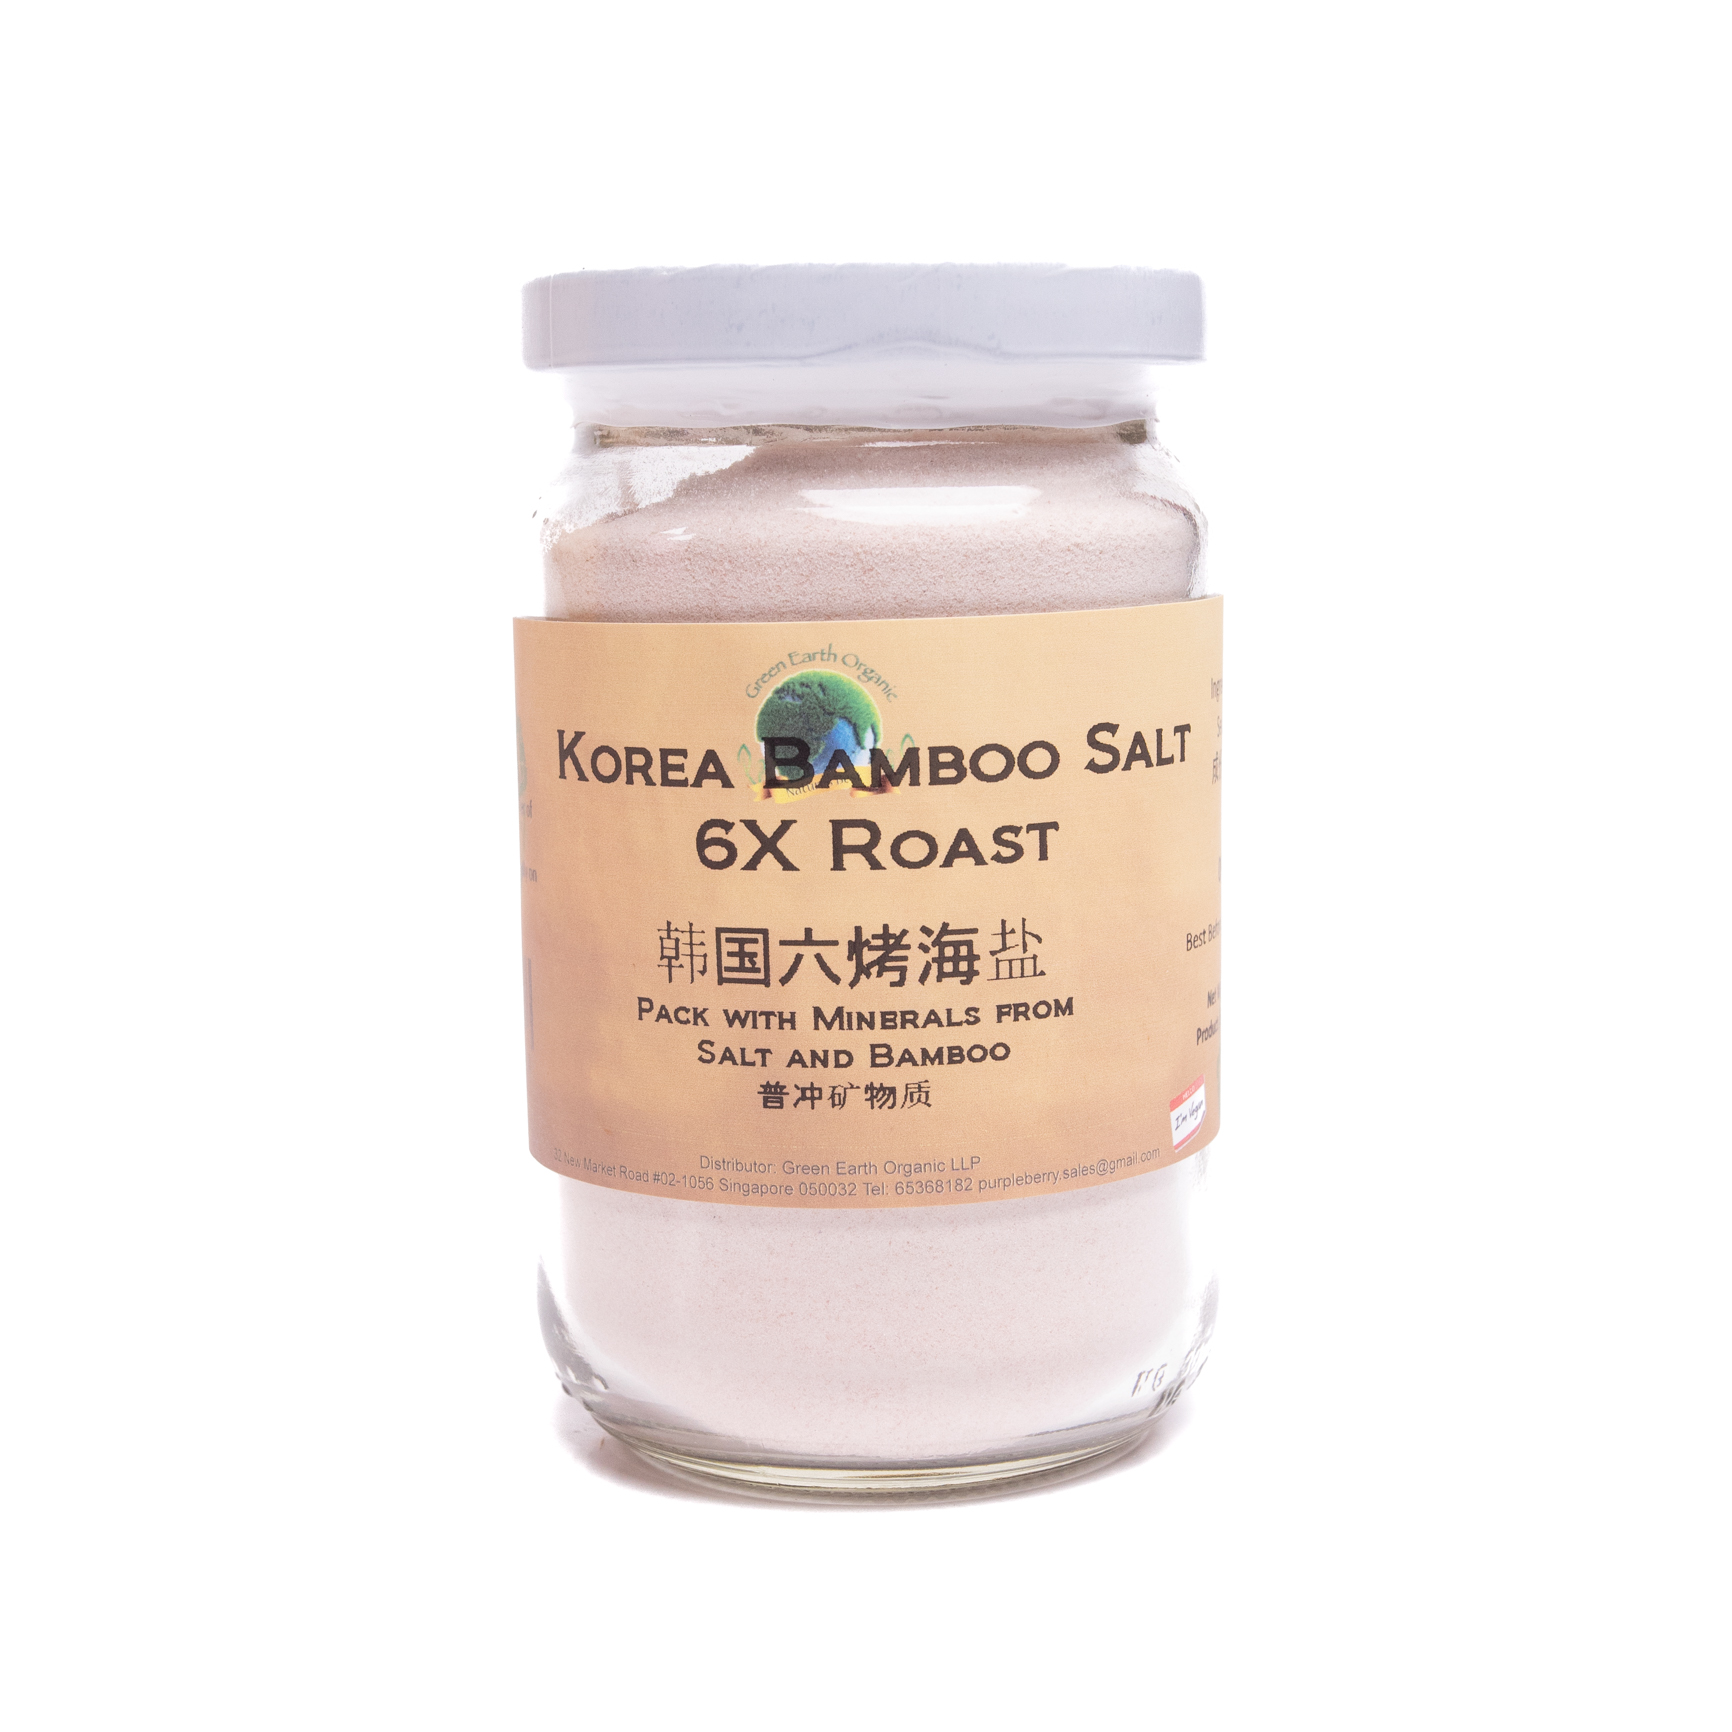 Korean Bamboo Salt 6x Roast